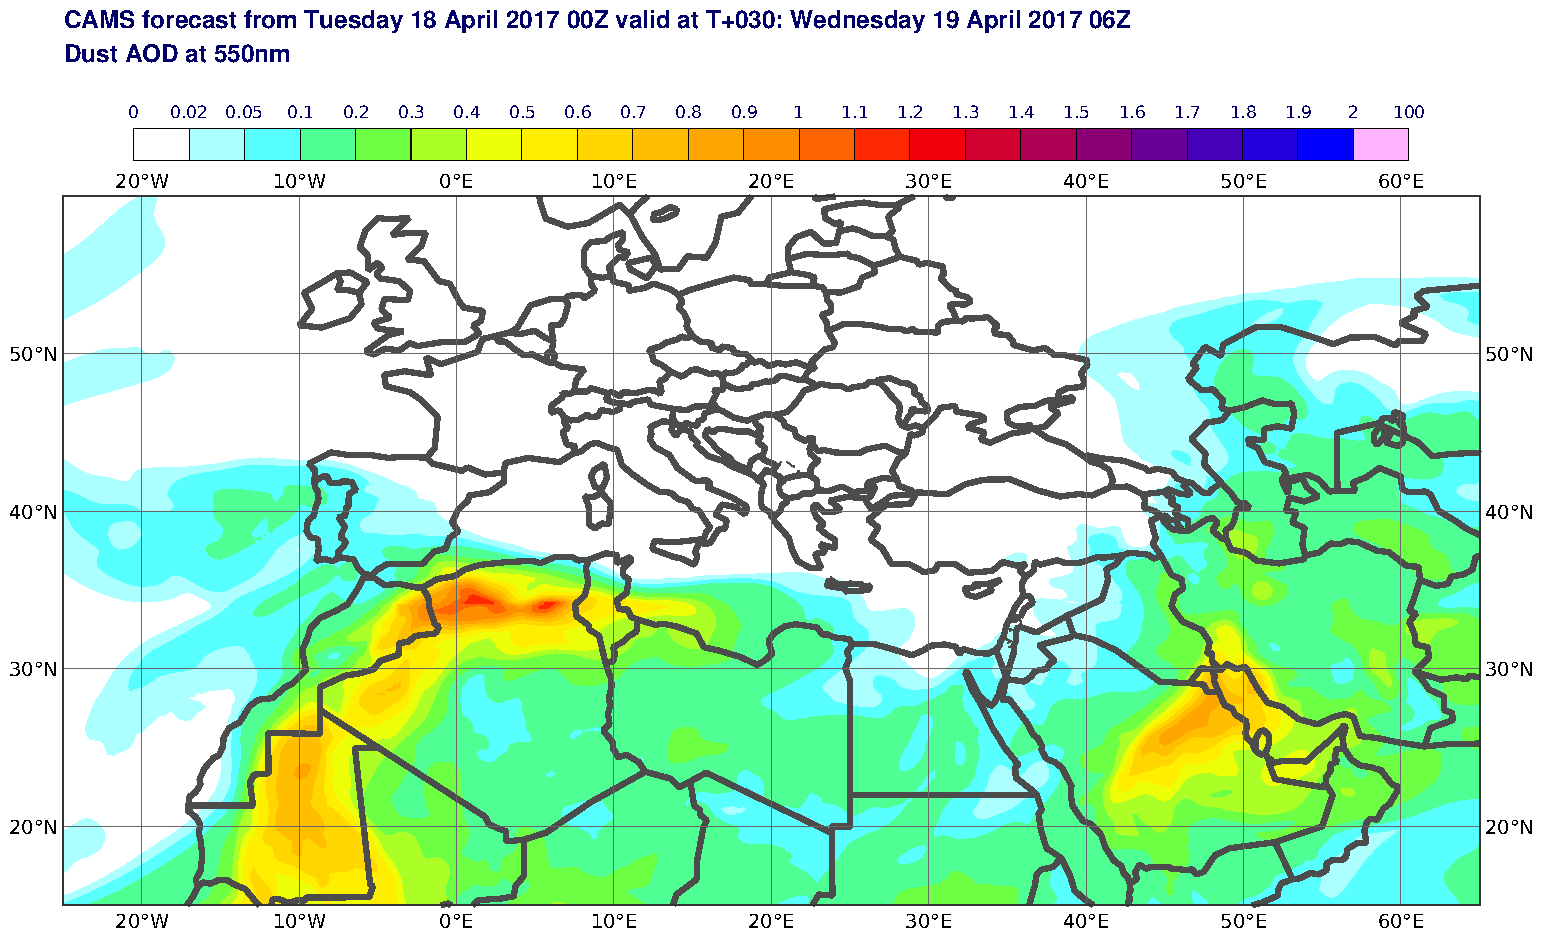 Dust AOD at 550nm valid at T30 - 2017-04-19 06:00